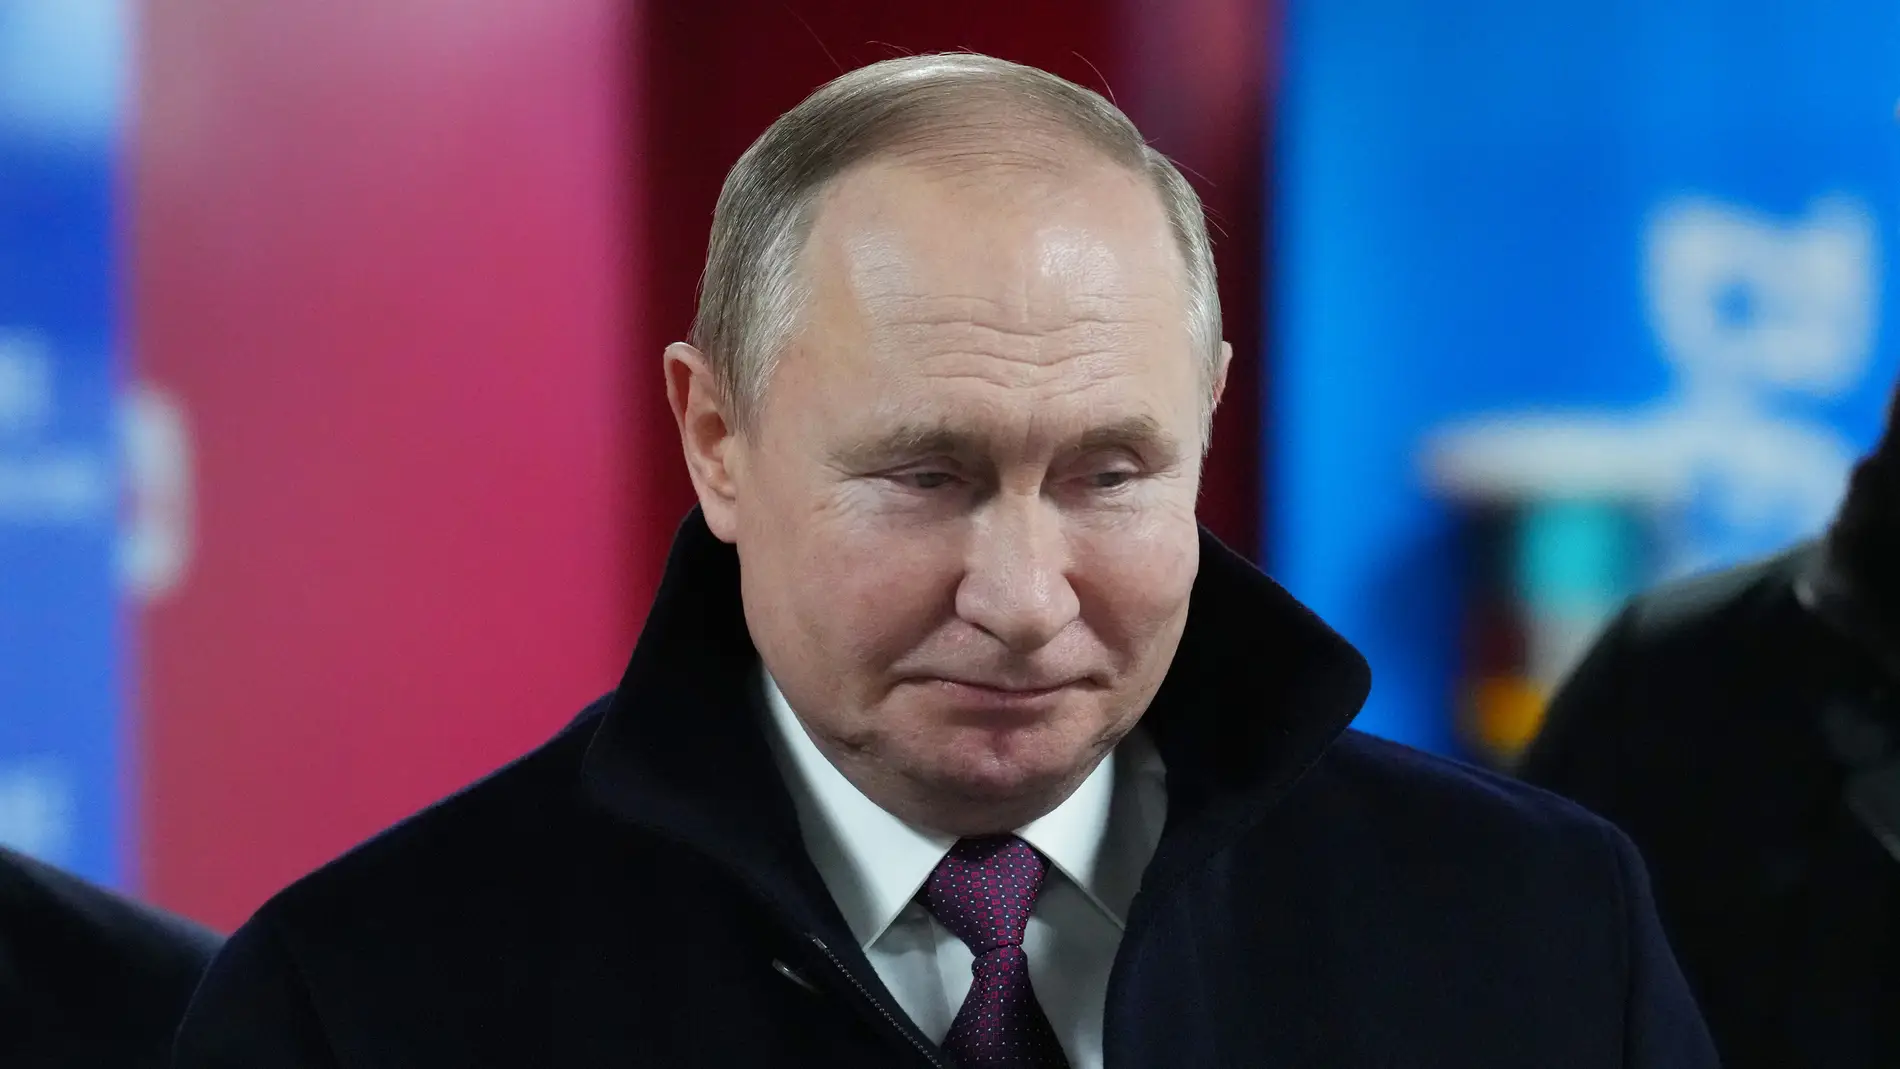 El presidente de Rusia, Vladimir Putin | Foto: Carl Court/Getty Images